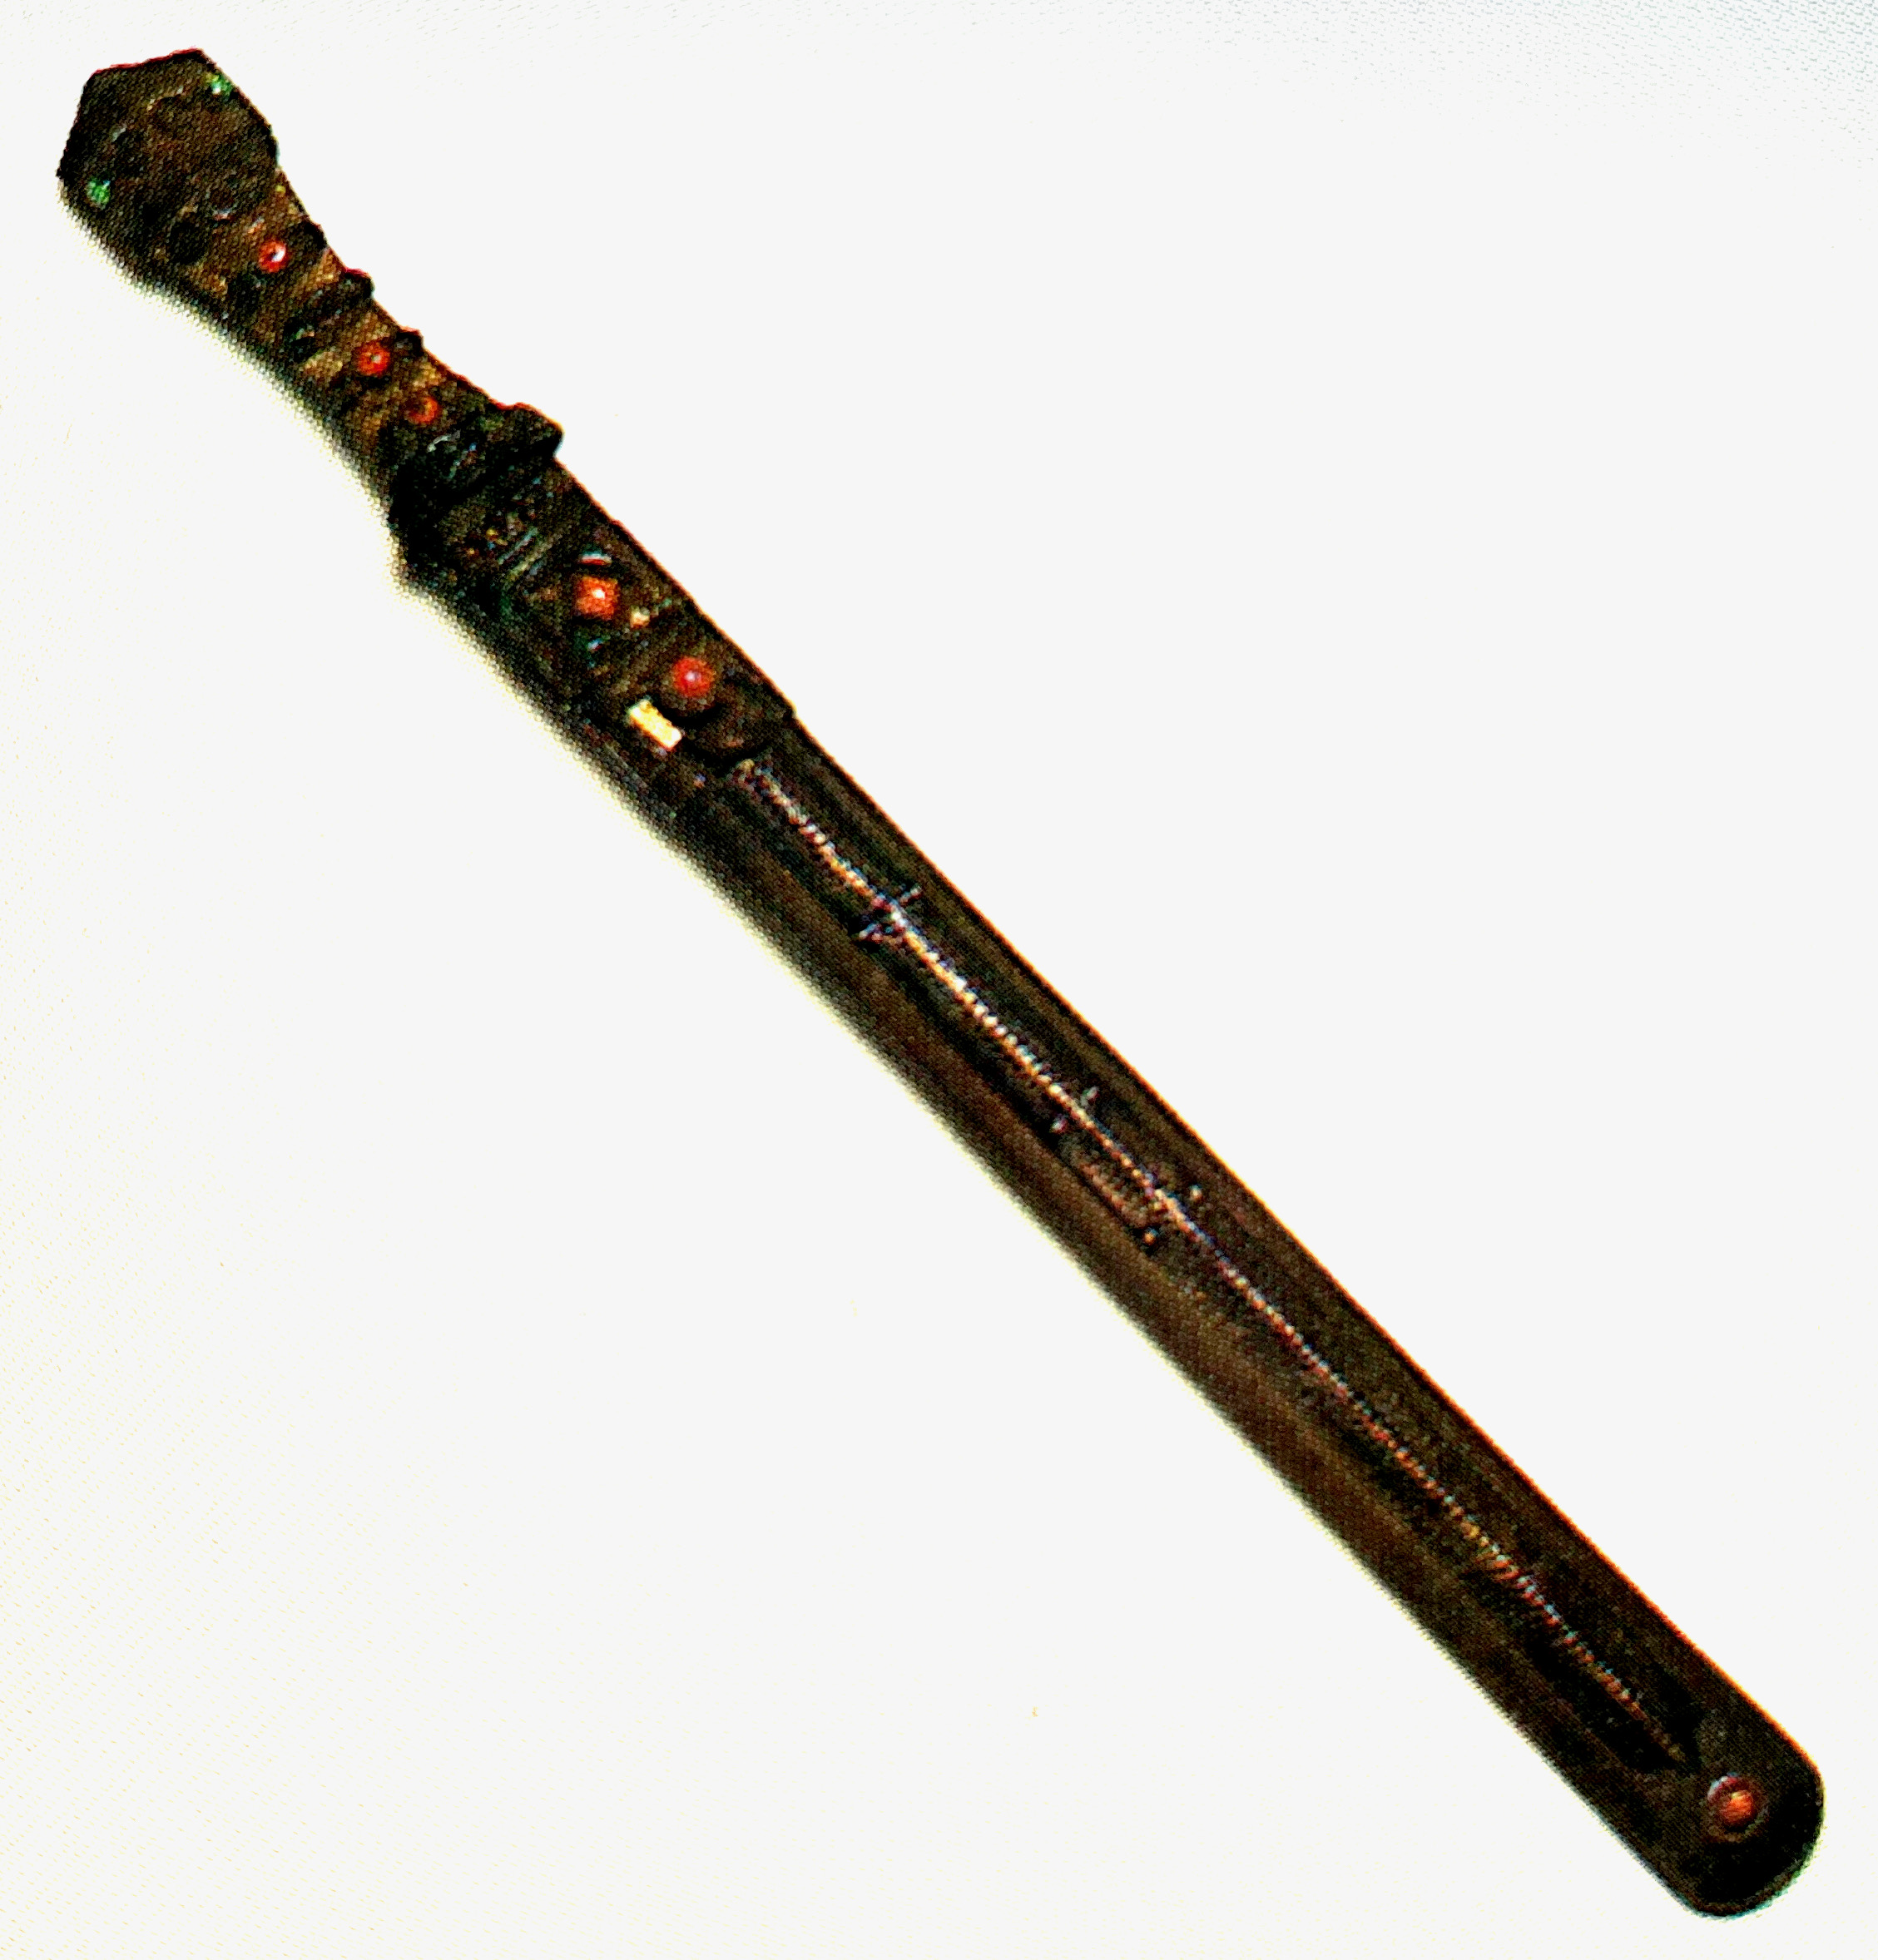 The Shenyang Palace Museum dagger